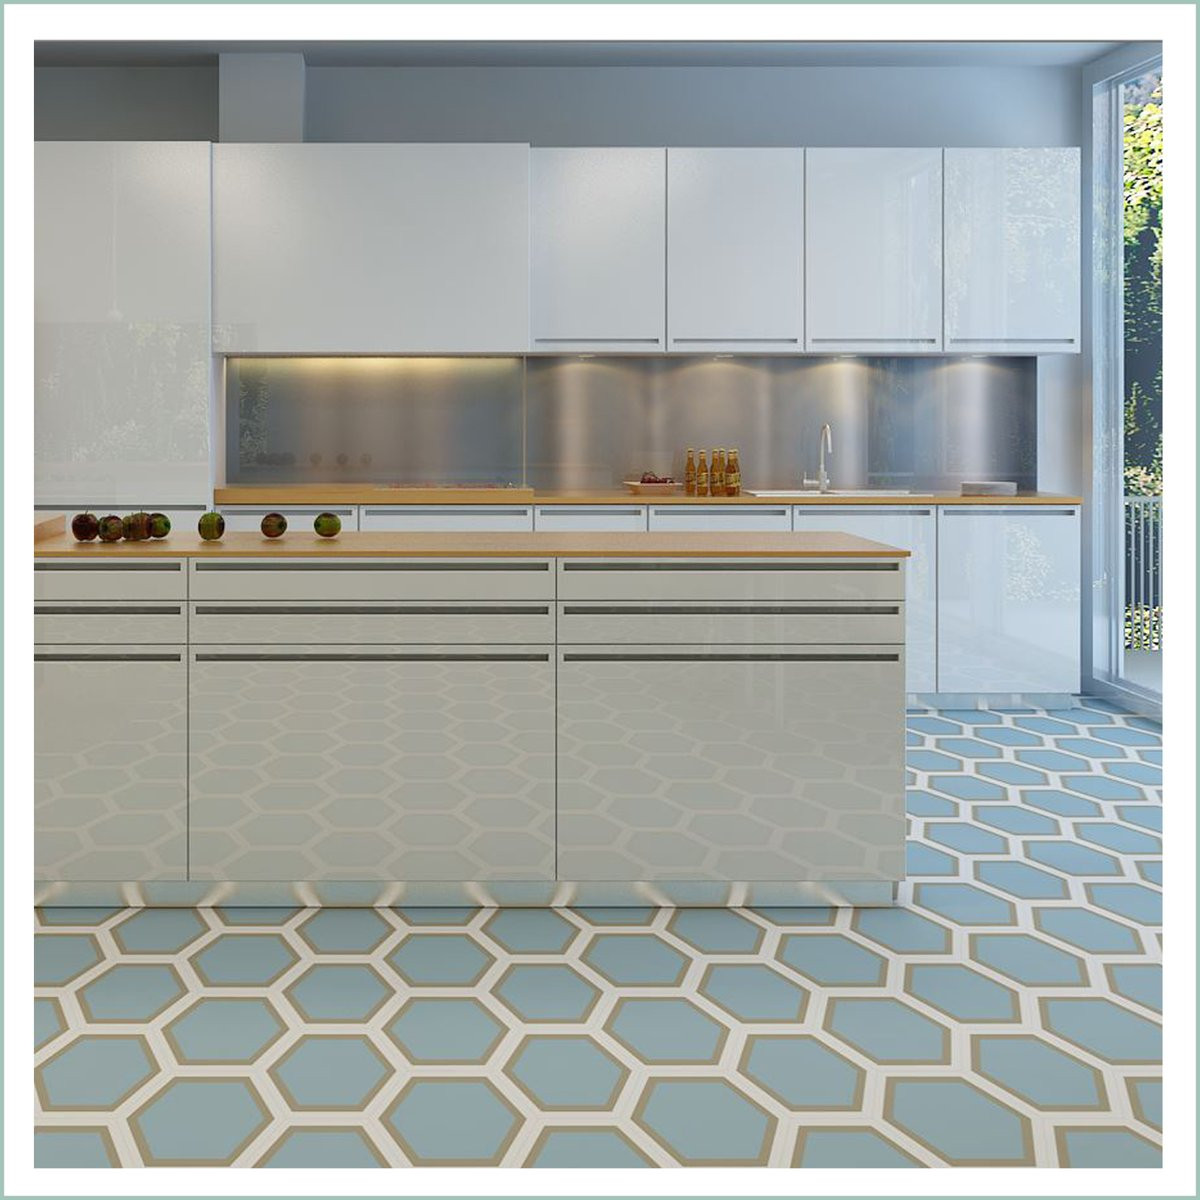 Hexagon Kitchen Floor Tiles
 Kitchen Design Ideas with Hexagon Kitchen Floor Tiles